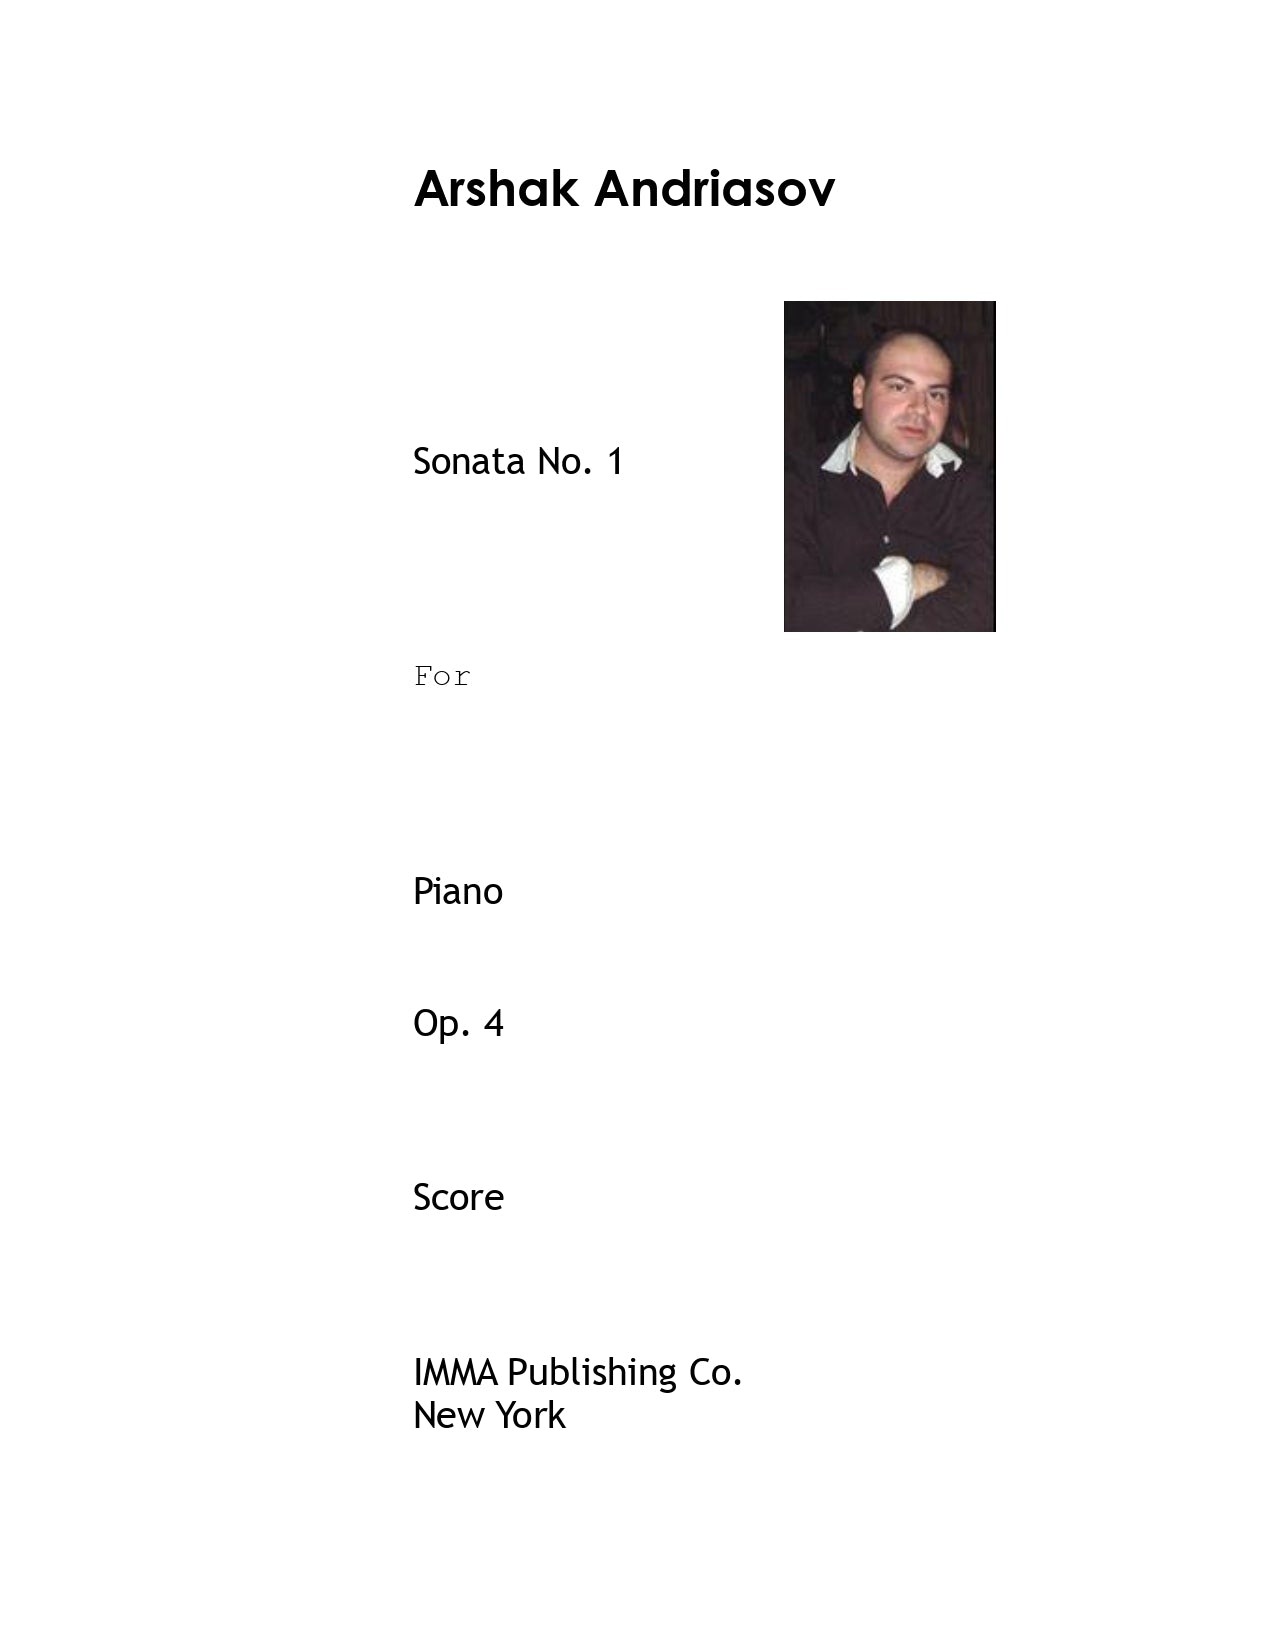 091. Arshak Andriasov: Sonata No. 1, Op. 4 for Piano (PDF)